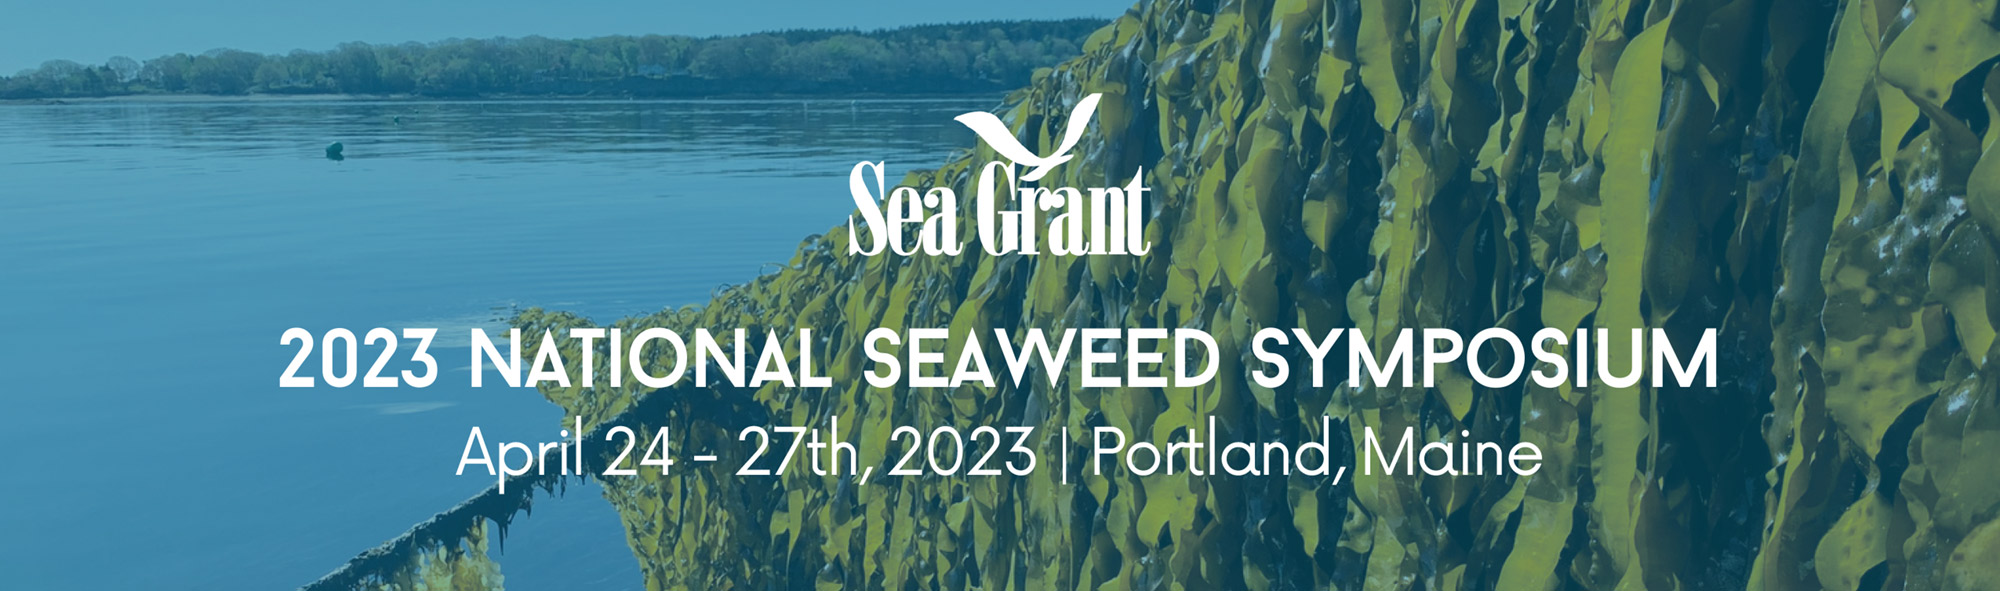 2023 National Seaweed Symposium Banner